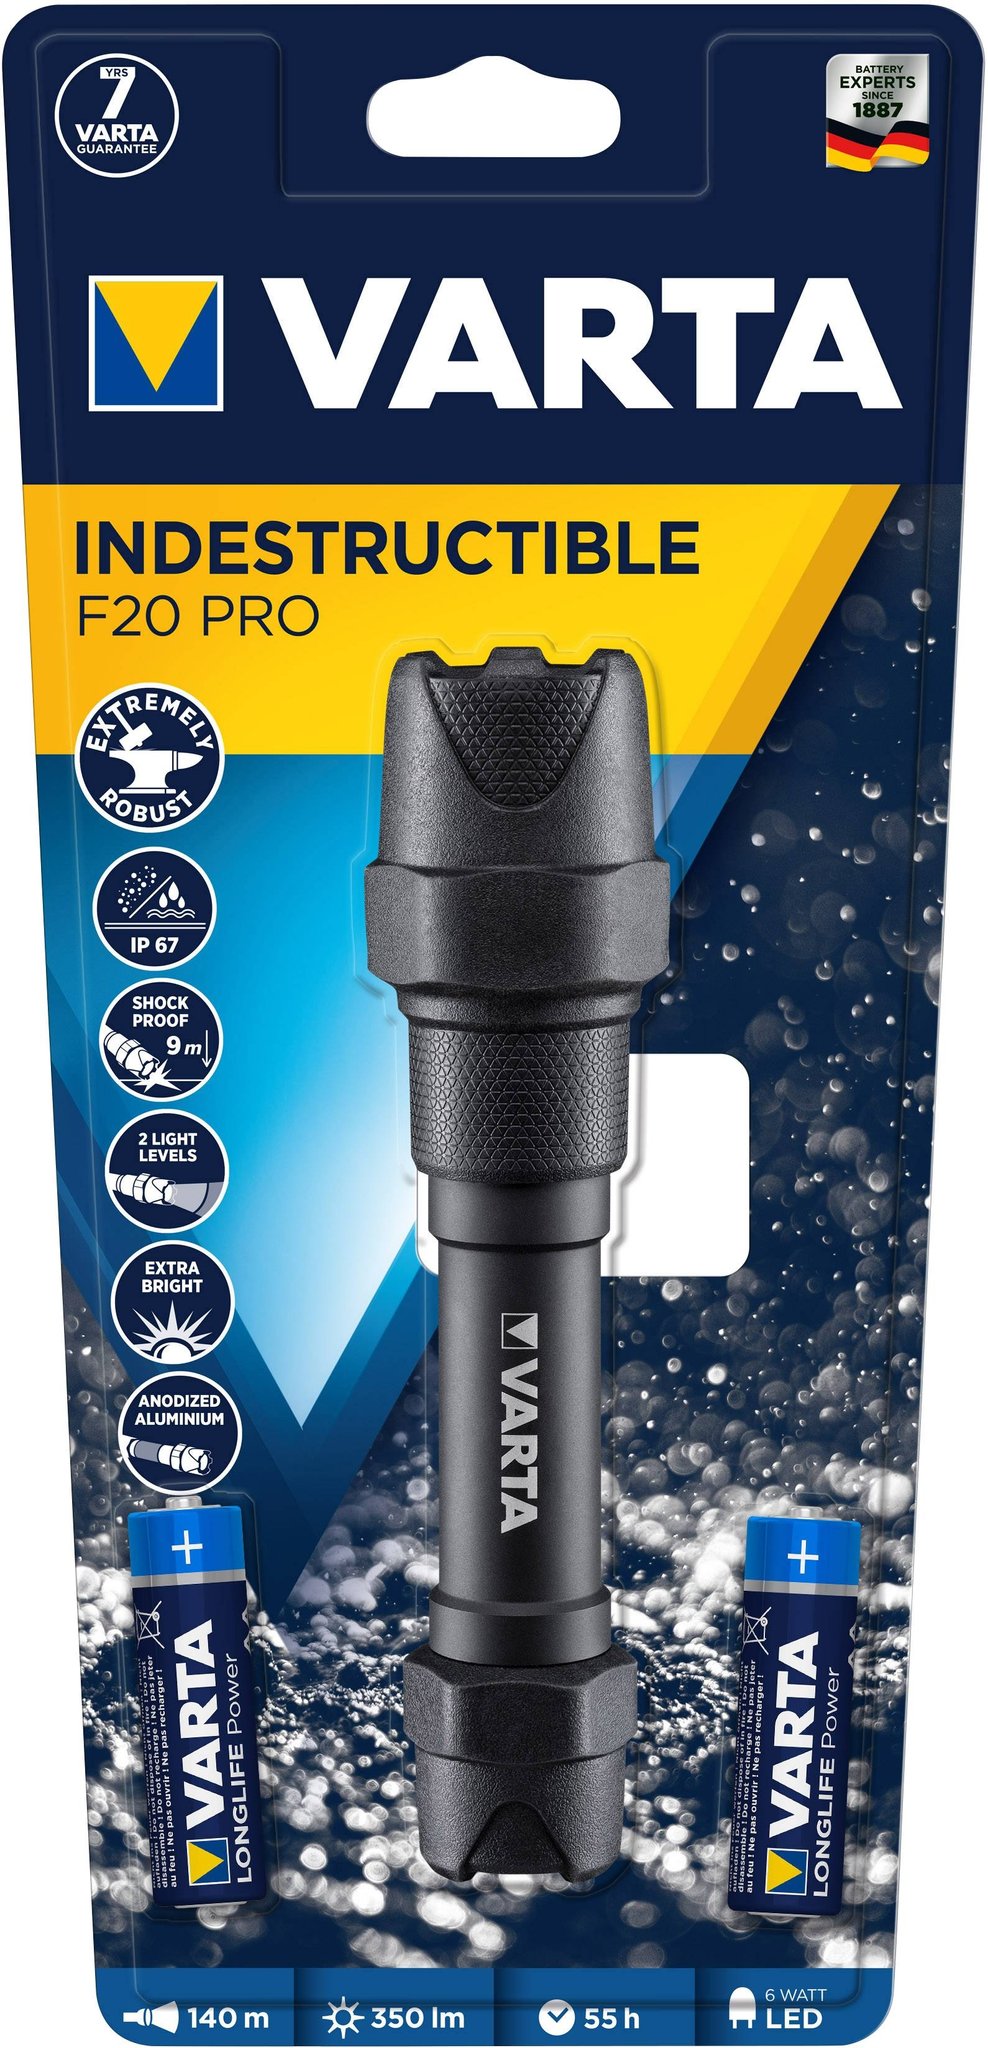 Varta Indestructible F20 Pro flashlight 350lm Oomipood